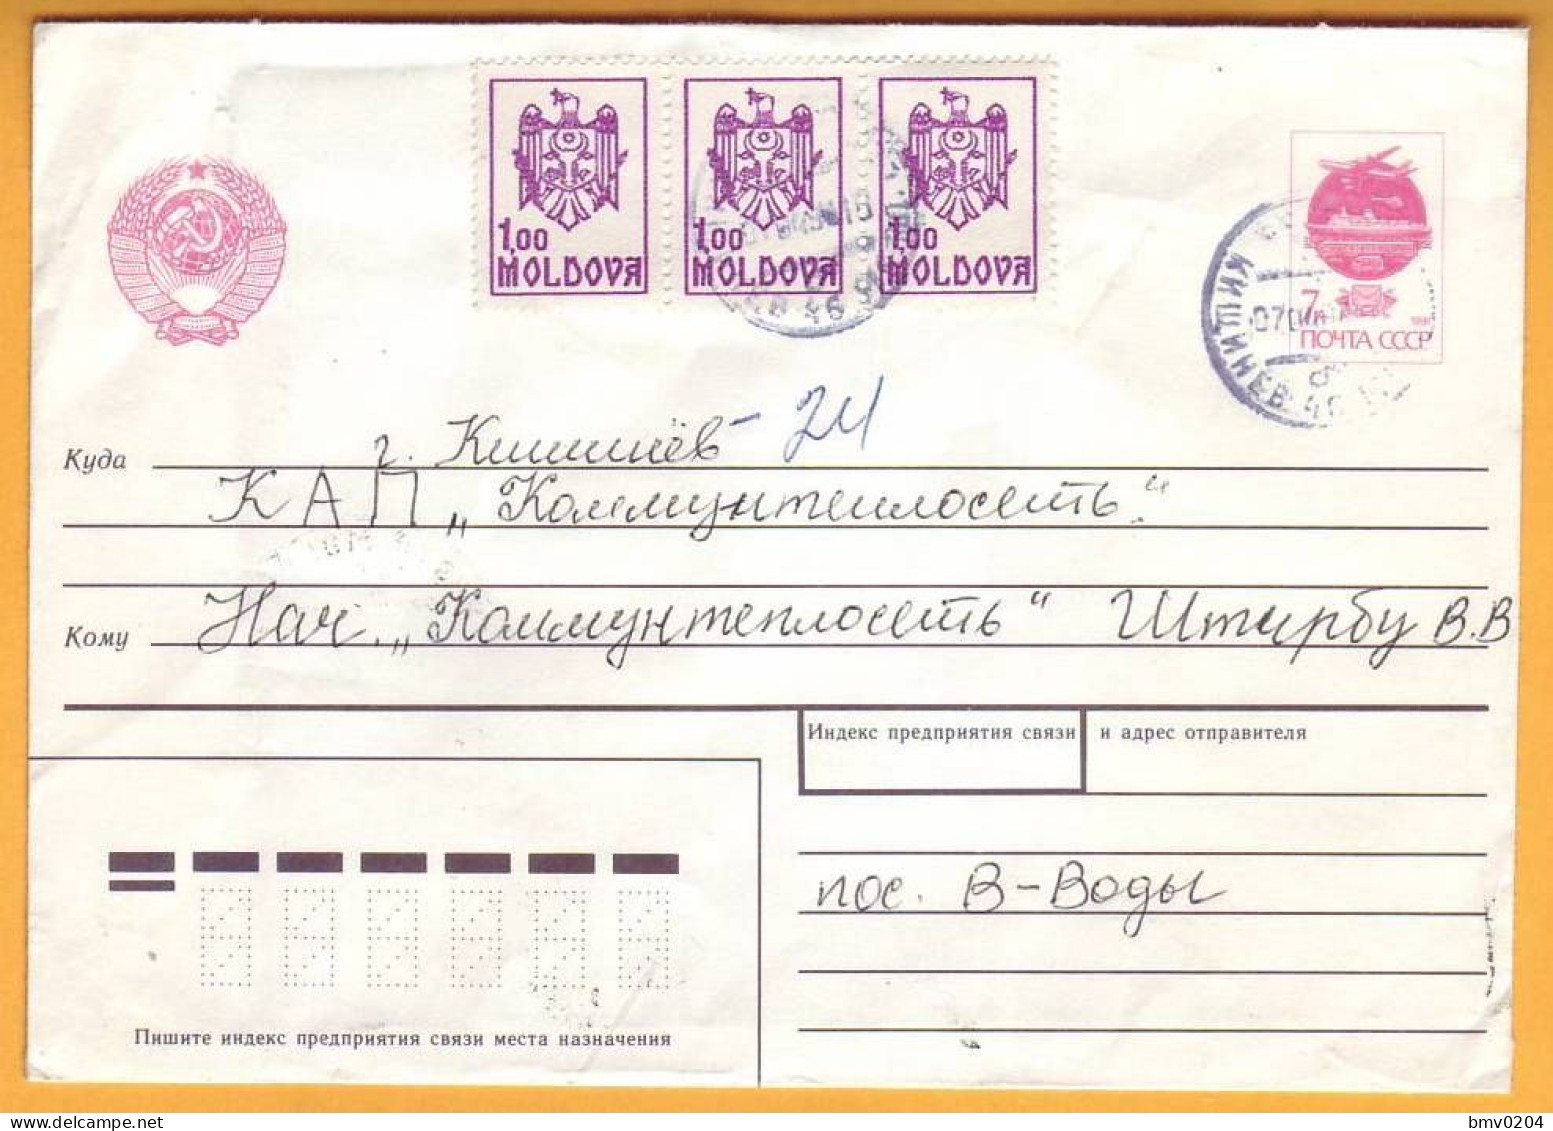 1993, Moldova Moldavie Moldau; USSR  Real-mail. Used Envelope. Coat Of Arms Coat Of Arms. - Moldavia